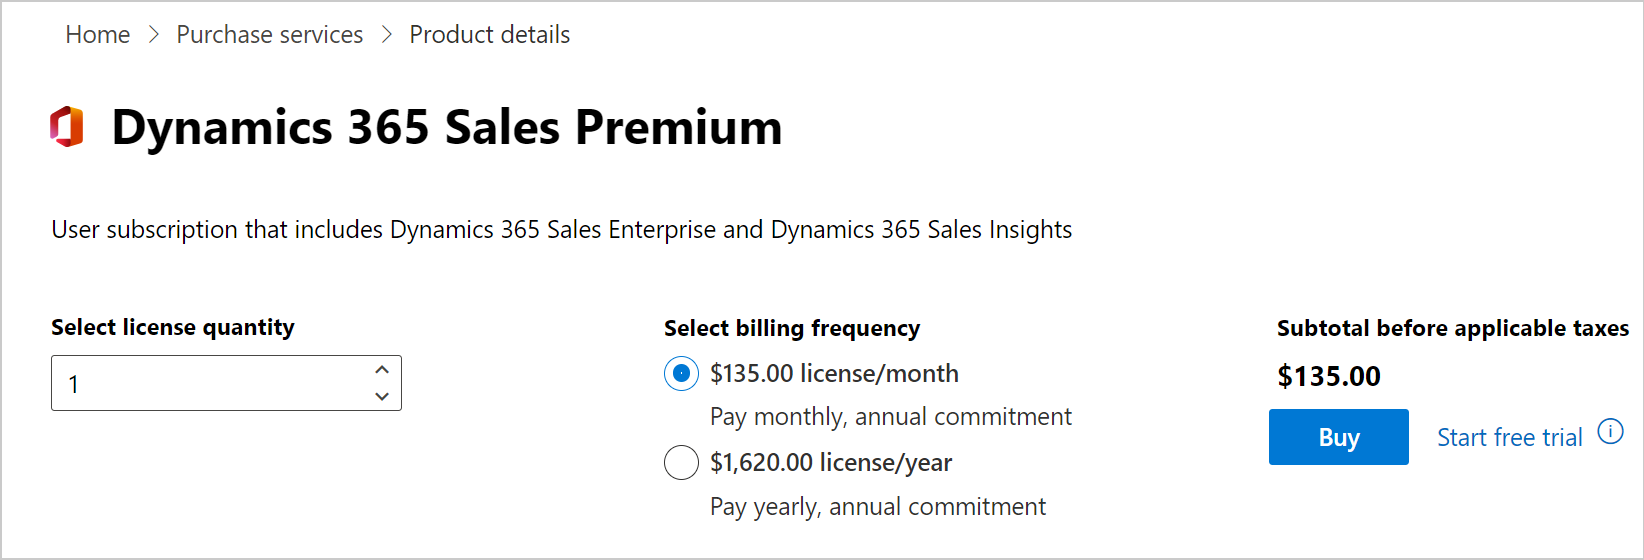 Dynamics 365 Sales Premium 라이선스 구매 페이지의 스크린샷.